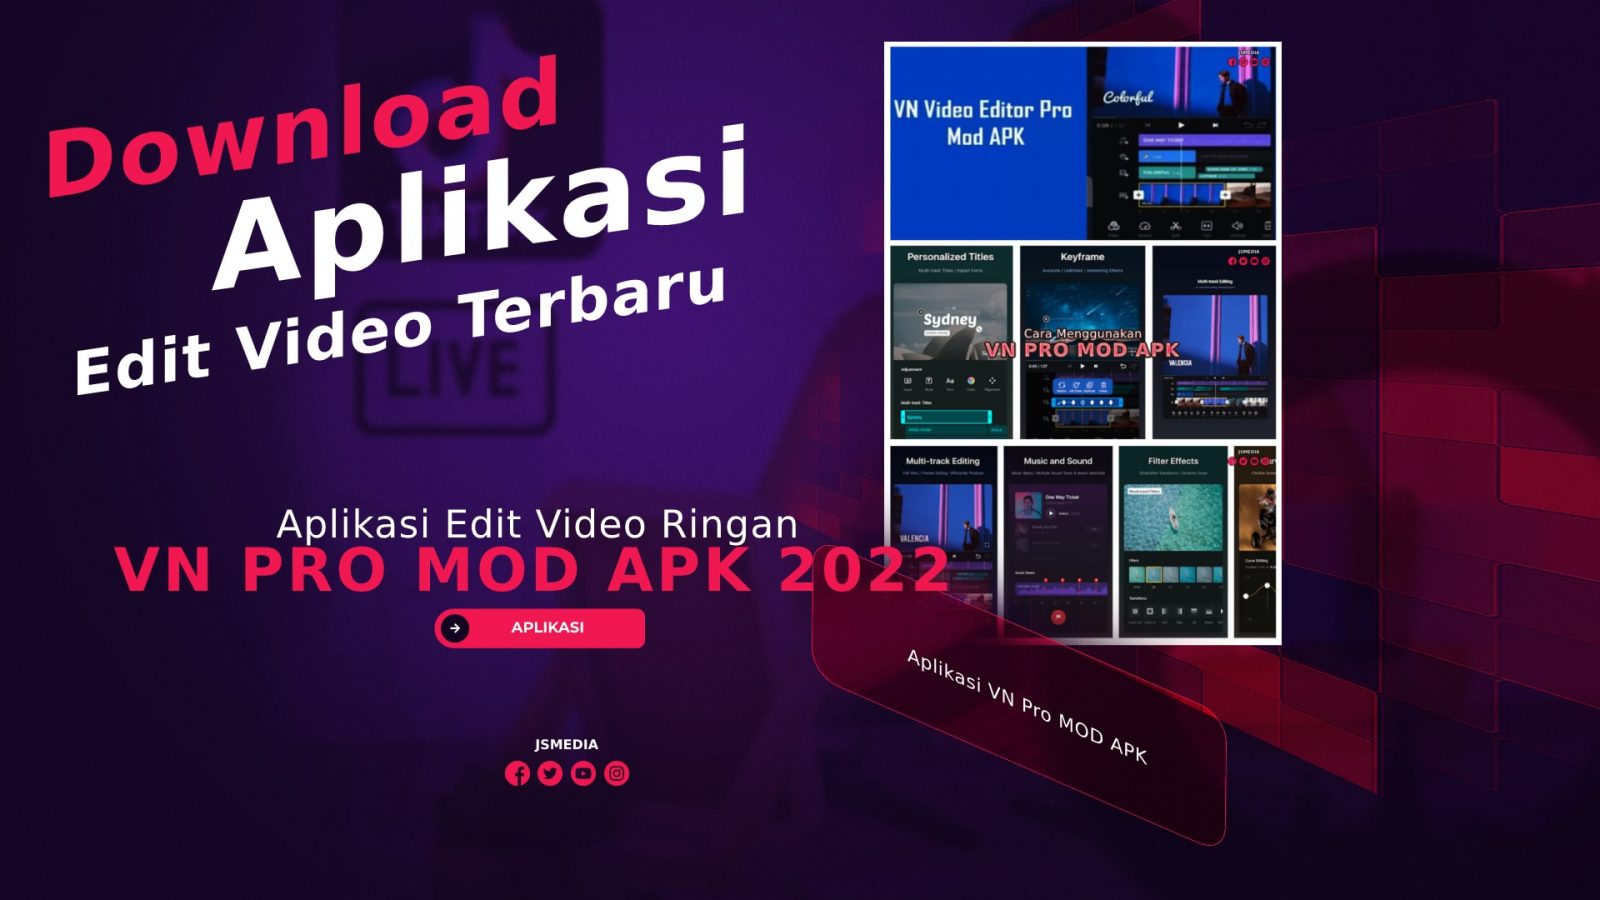 Download Aplikasi VN Pro MOD APK 2022 Terbaru, Edit Video Makin Aesthetic